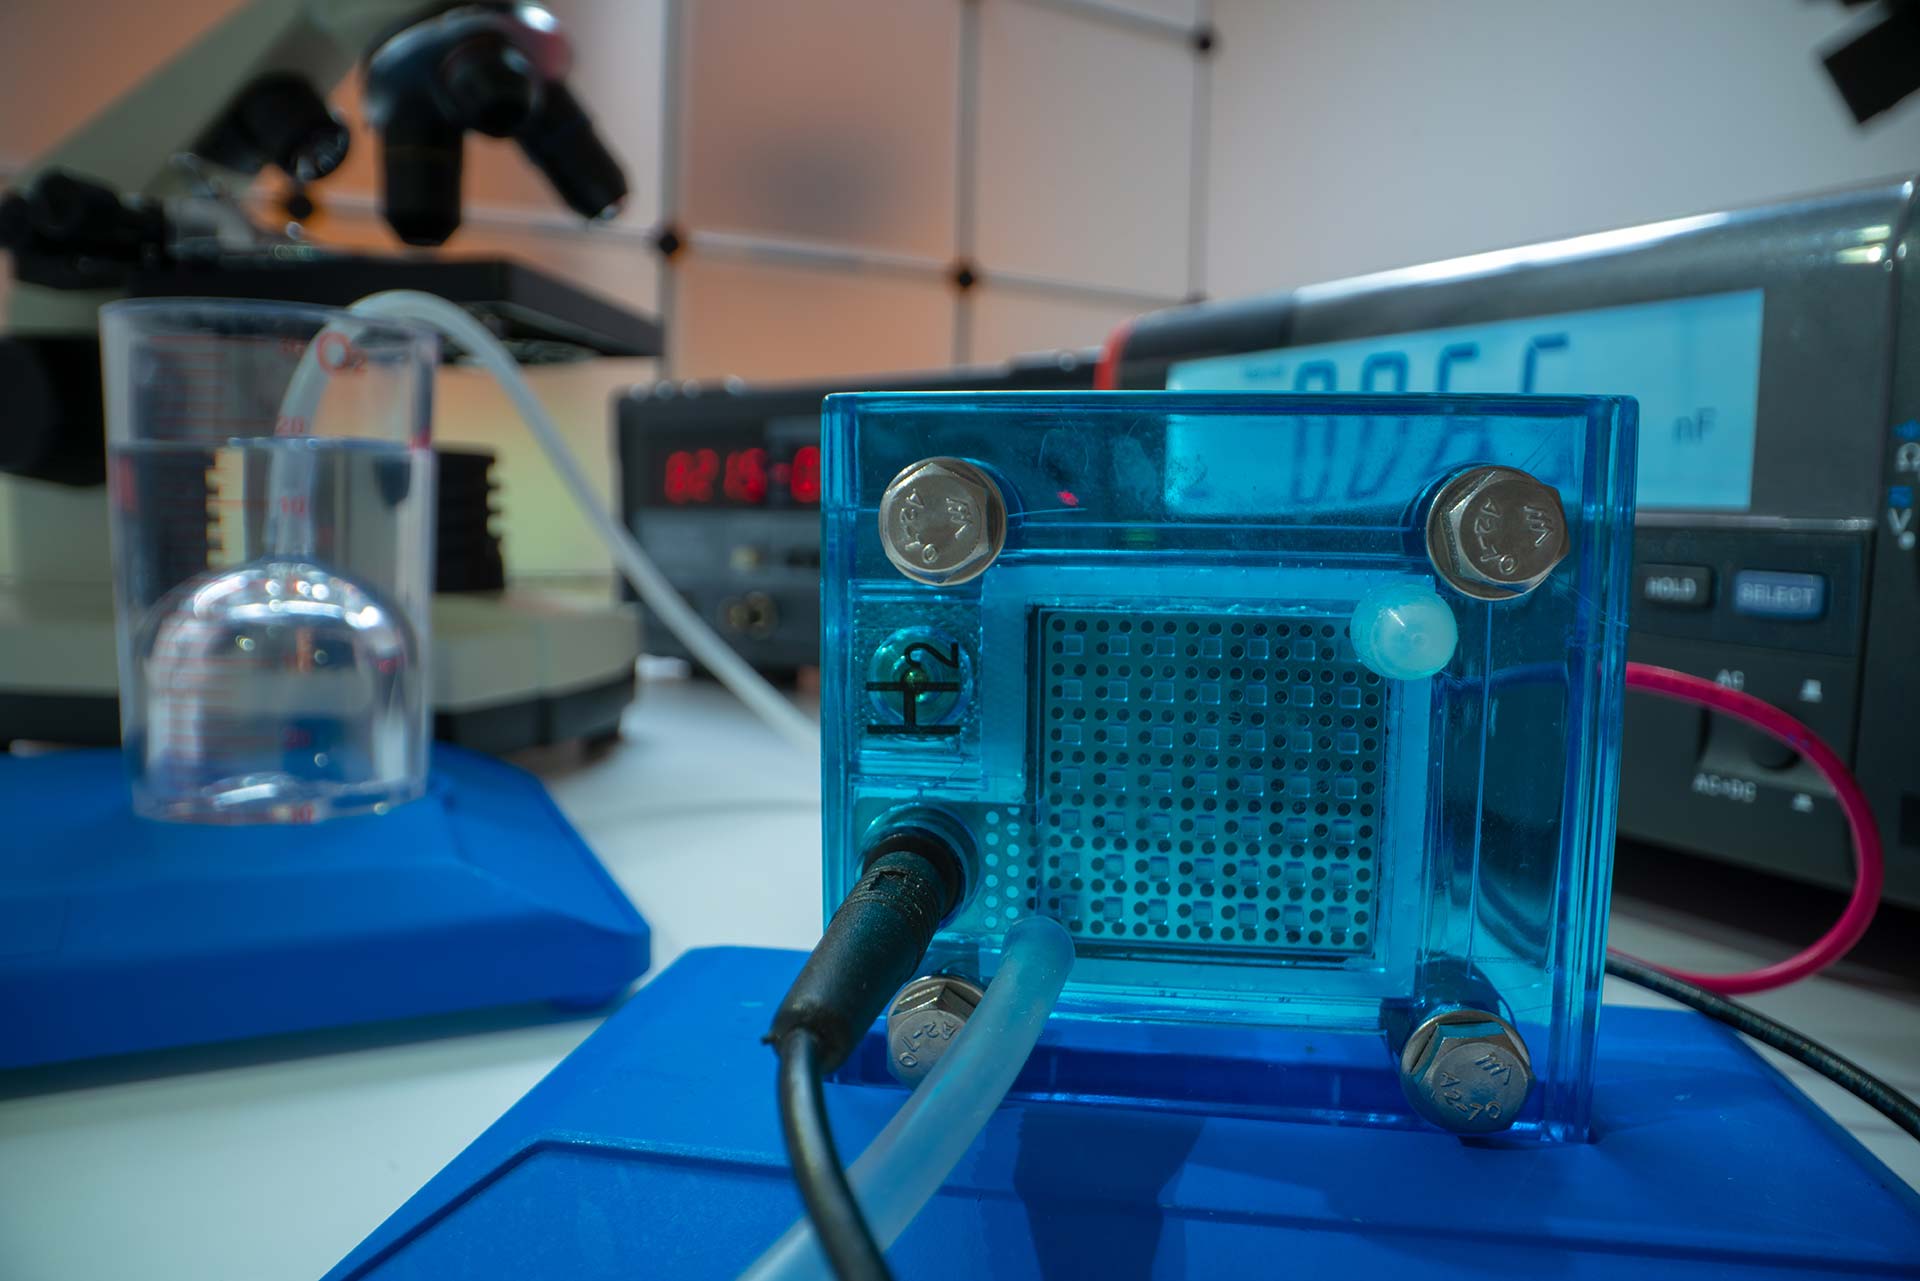 blue hydrogen fuel cell sitting in a desk